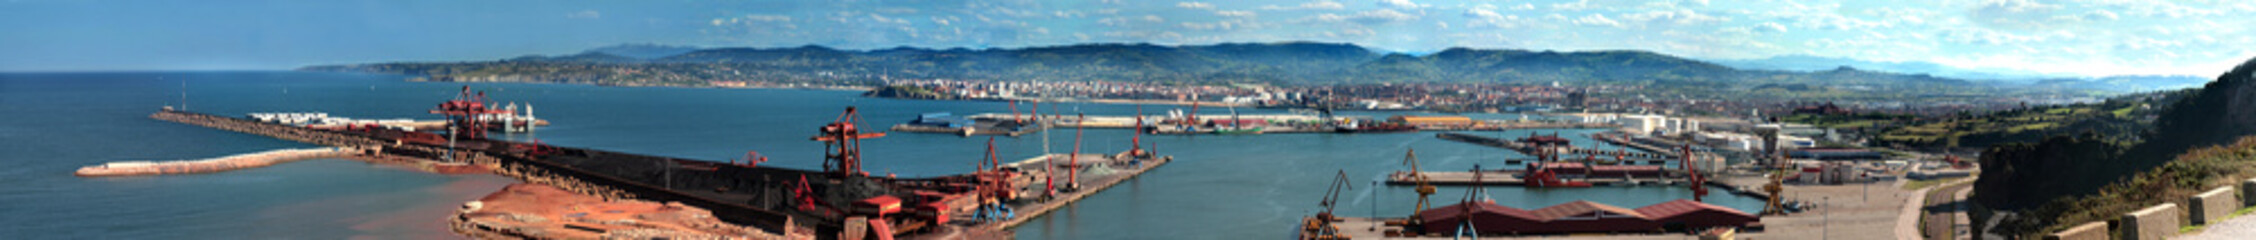 Vista panoramica del puerto de Gijón